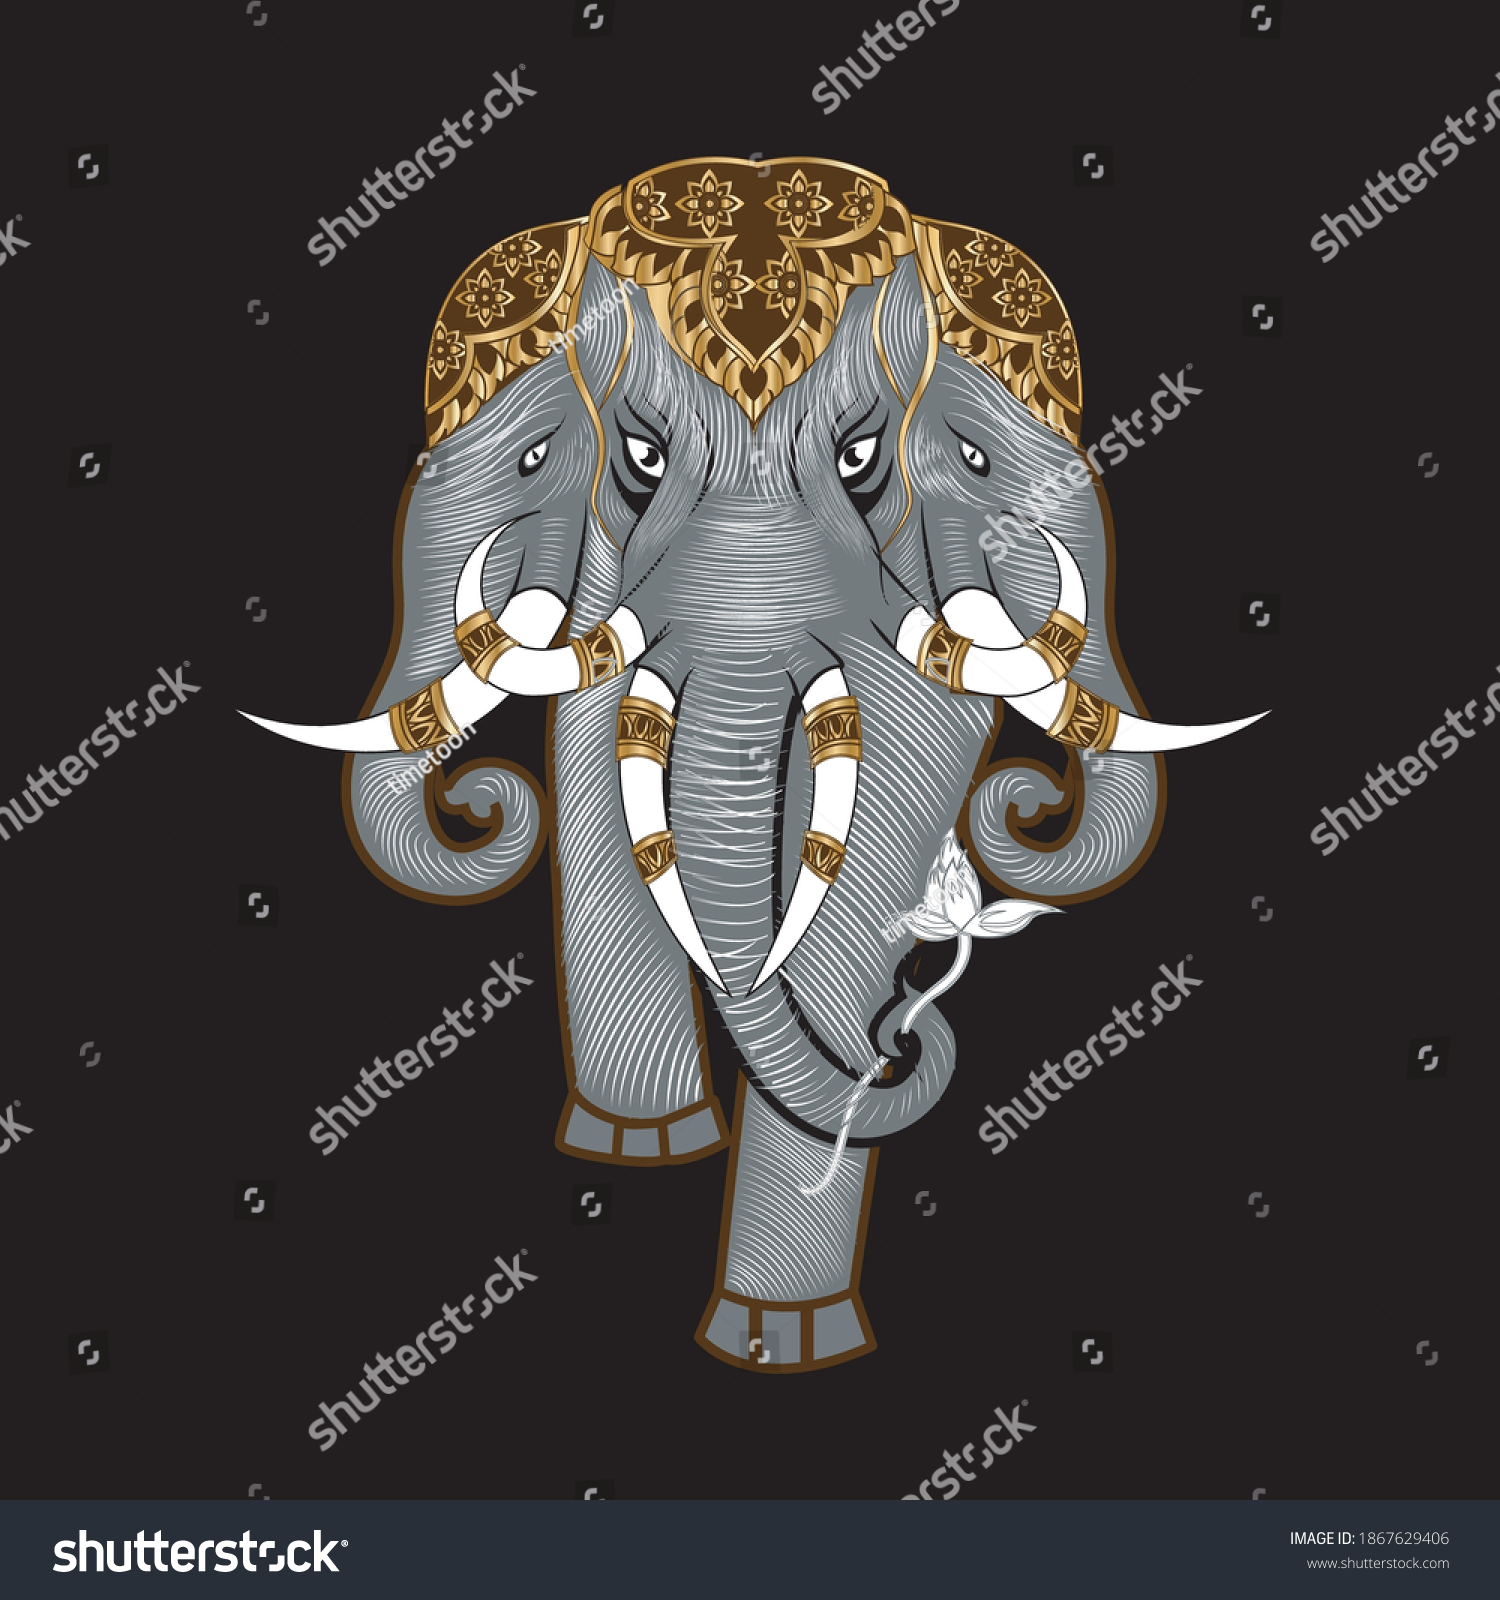 SVG of Erawan 3-headed elephant Line asia svg